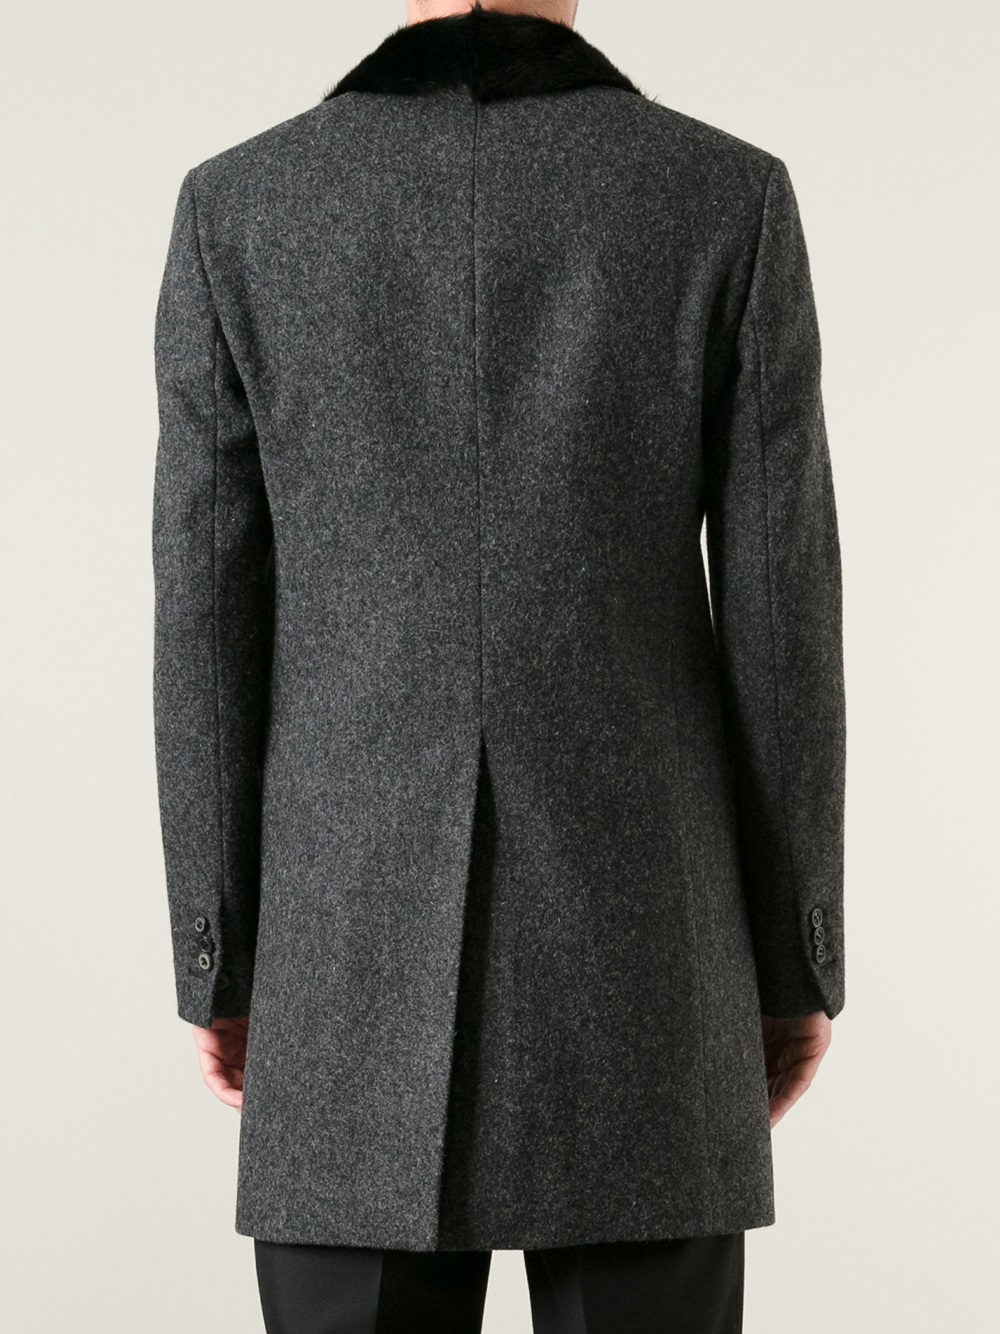 Lyst - Dsquared² Fur Lapels Overcoat in Gray for Men